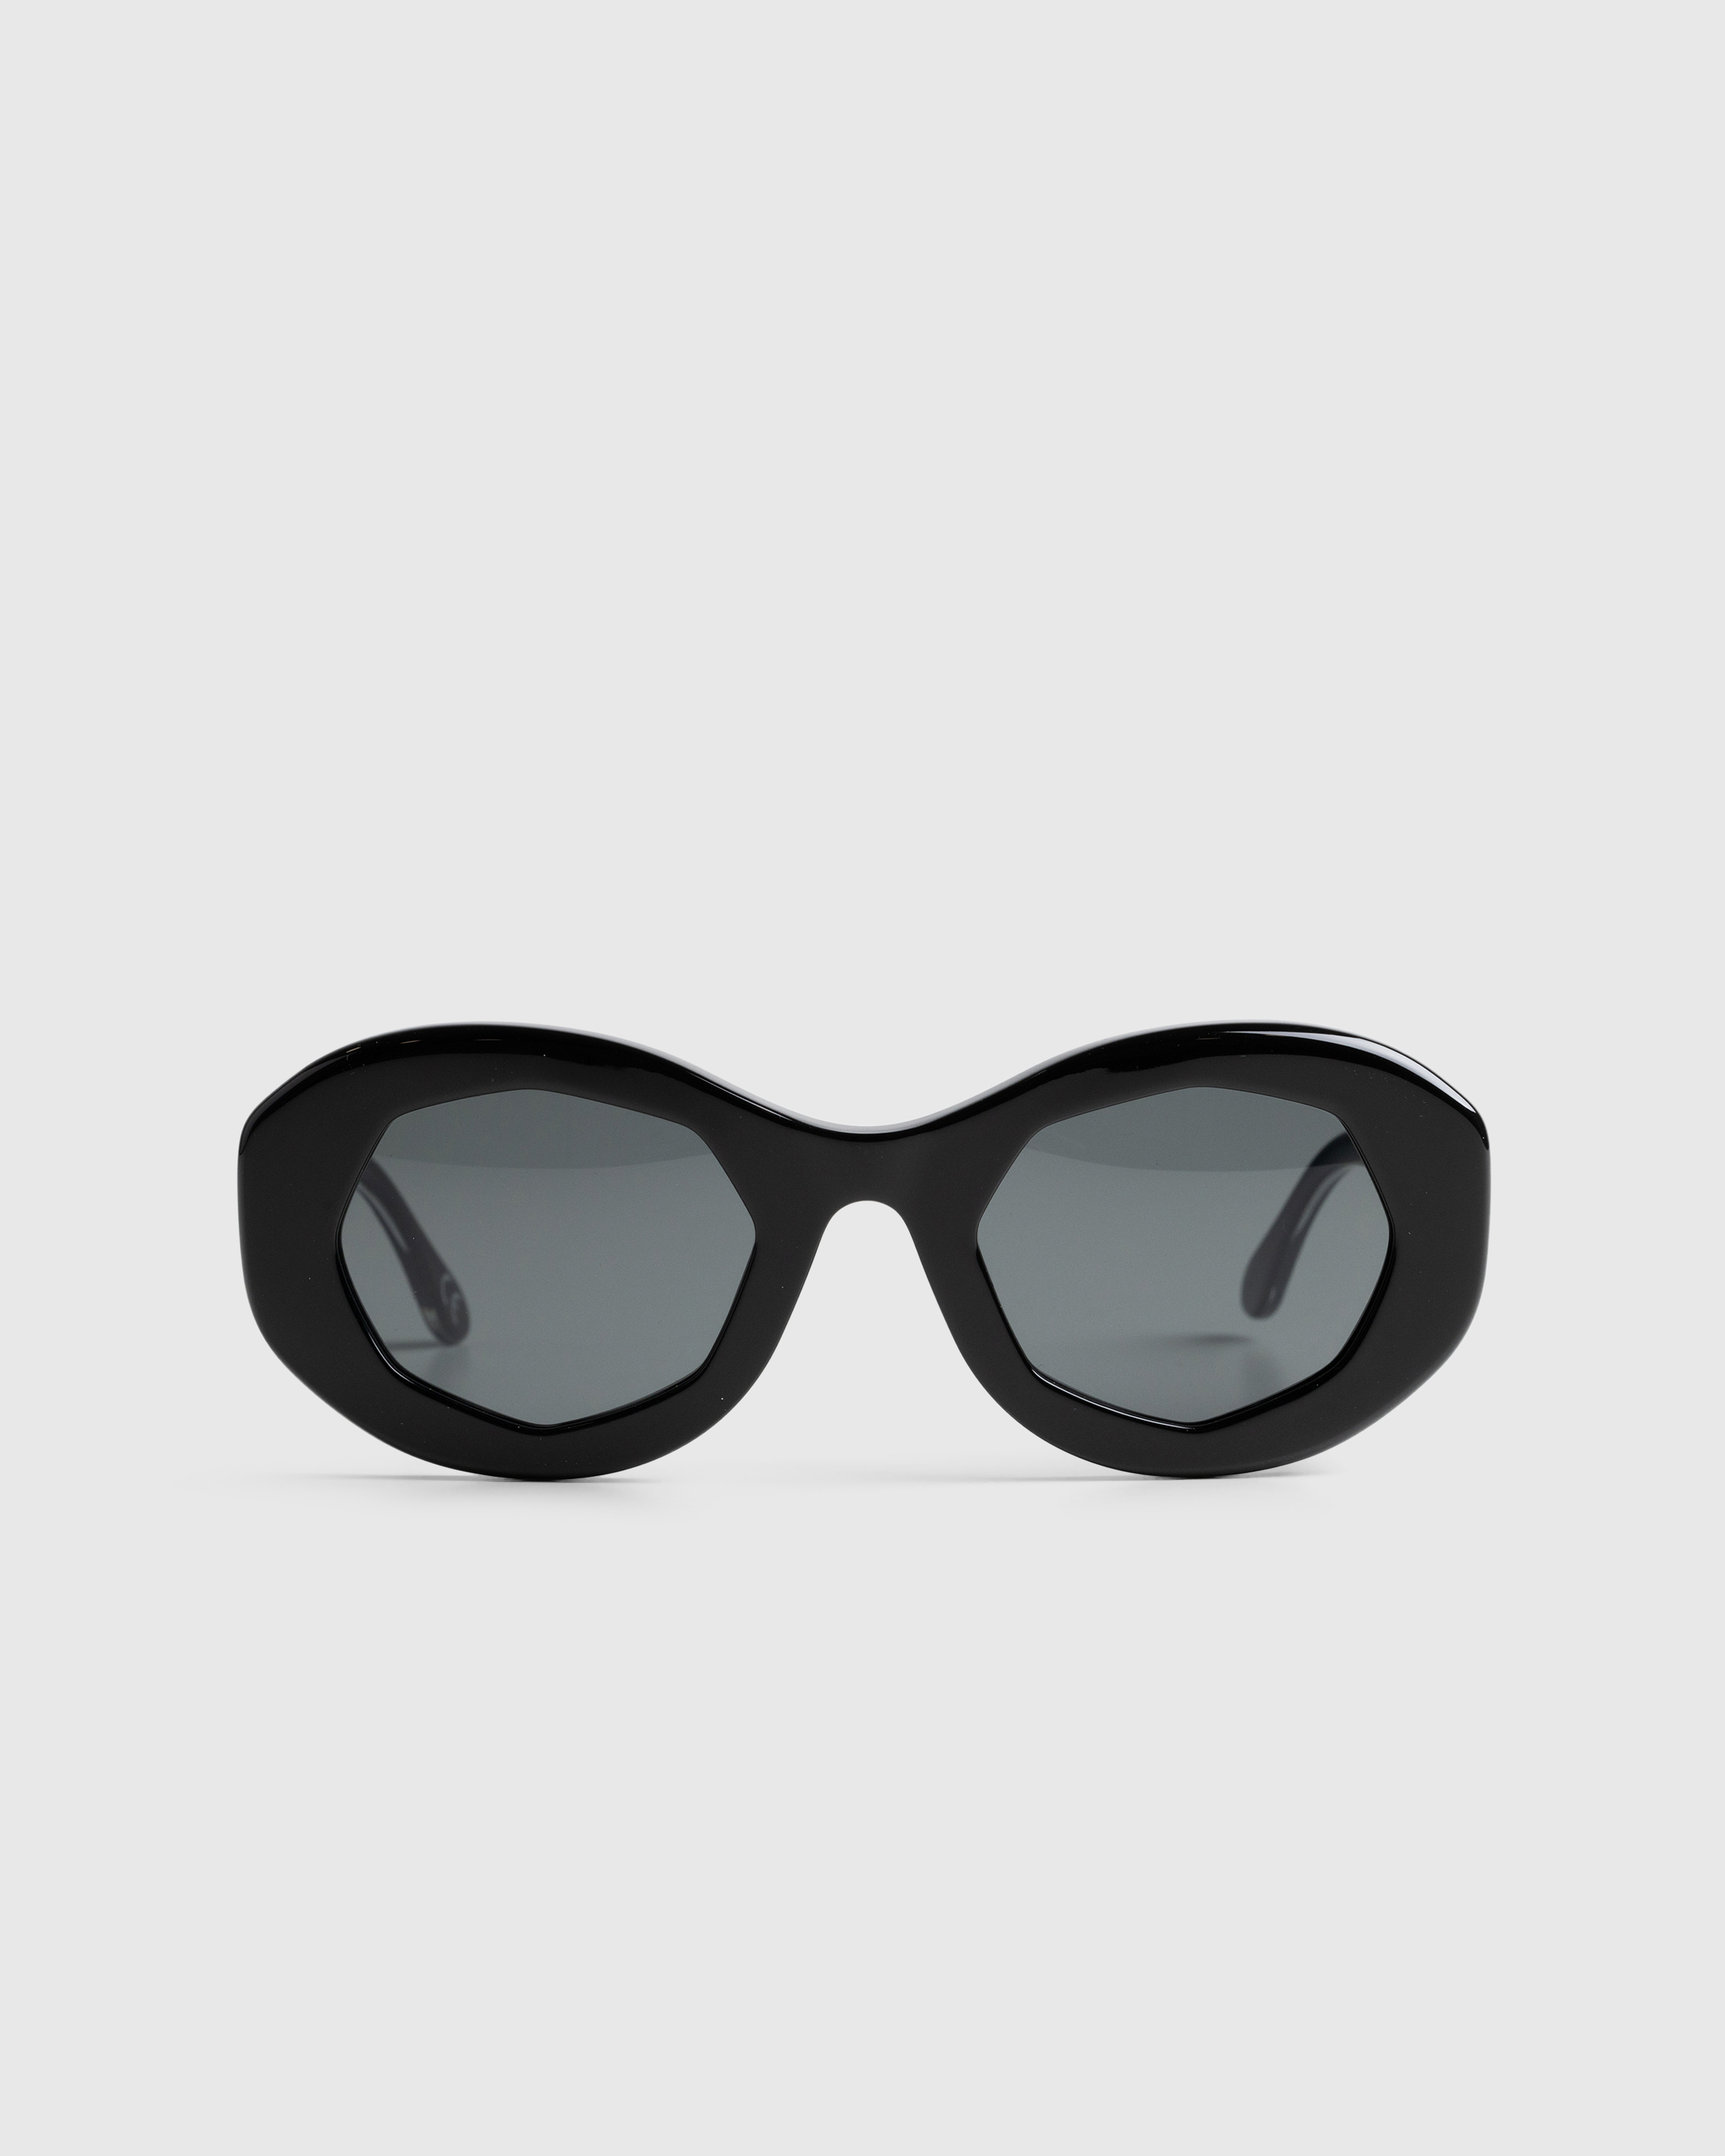 Marni x retrosuperfuture – Mount Bromo Blck Fndtn - Sunglasses - Black - Image 1